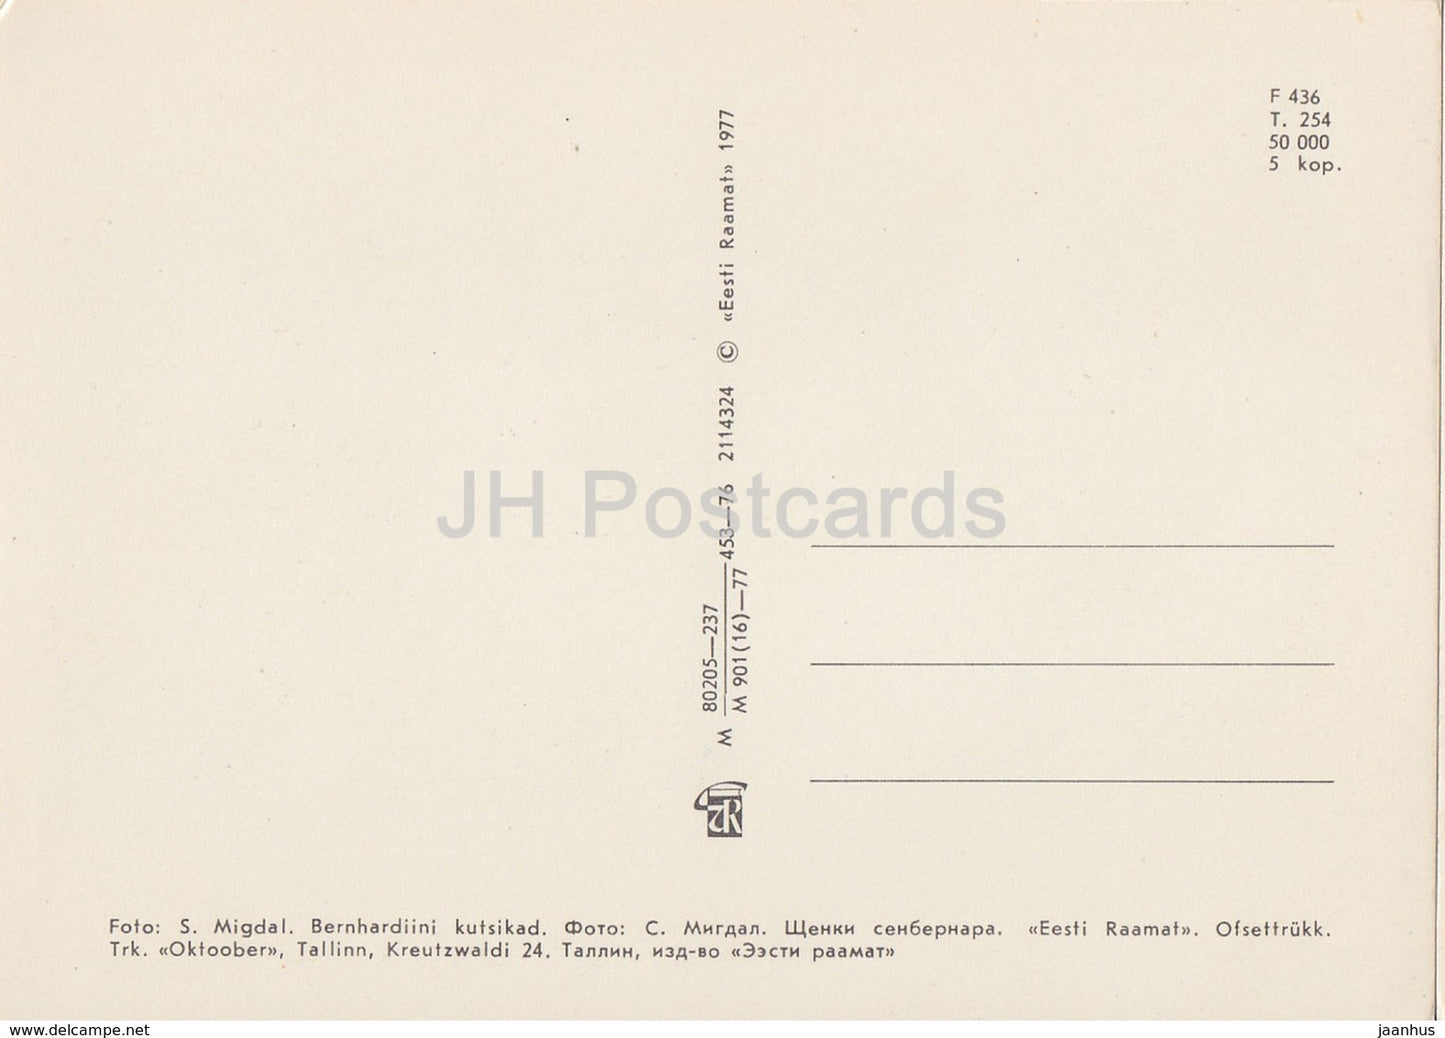 St. Bernard poppies - dogs - animals - 1977 - Estonia USSR - unused - JH Postcards